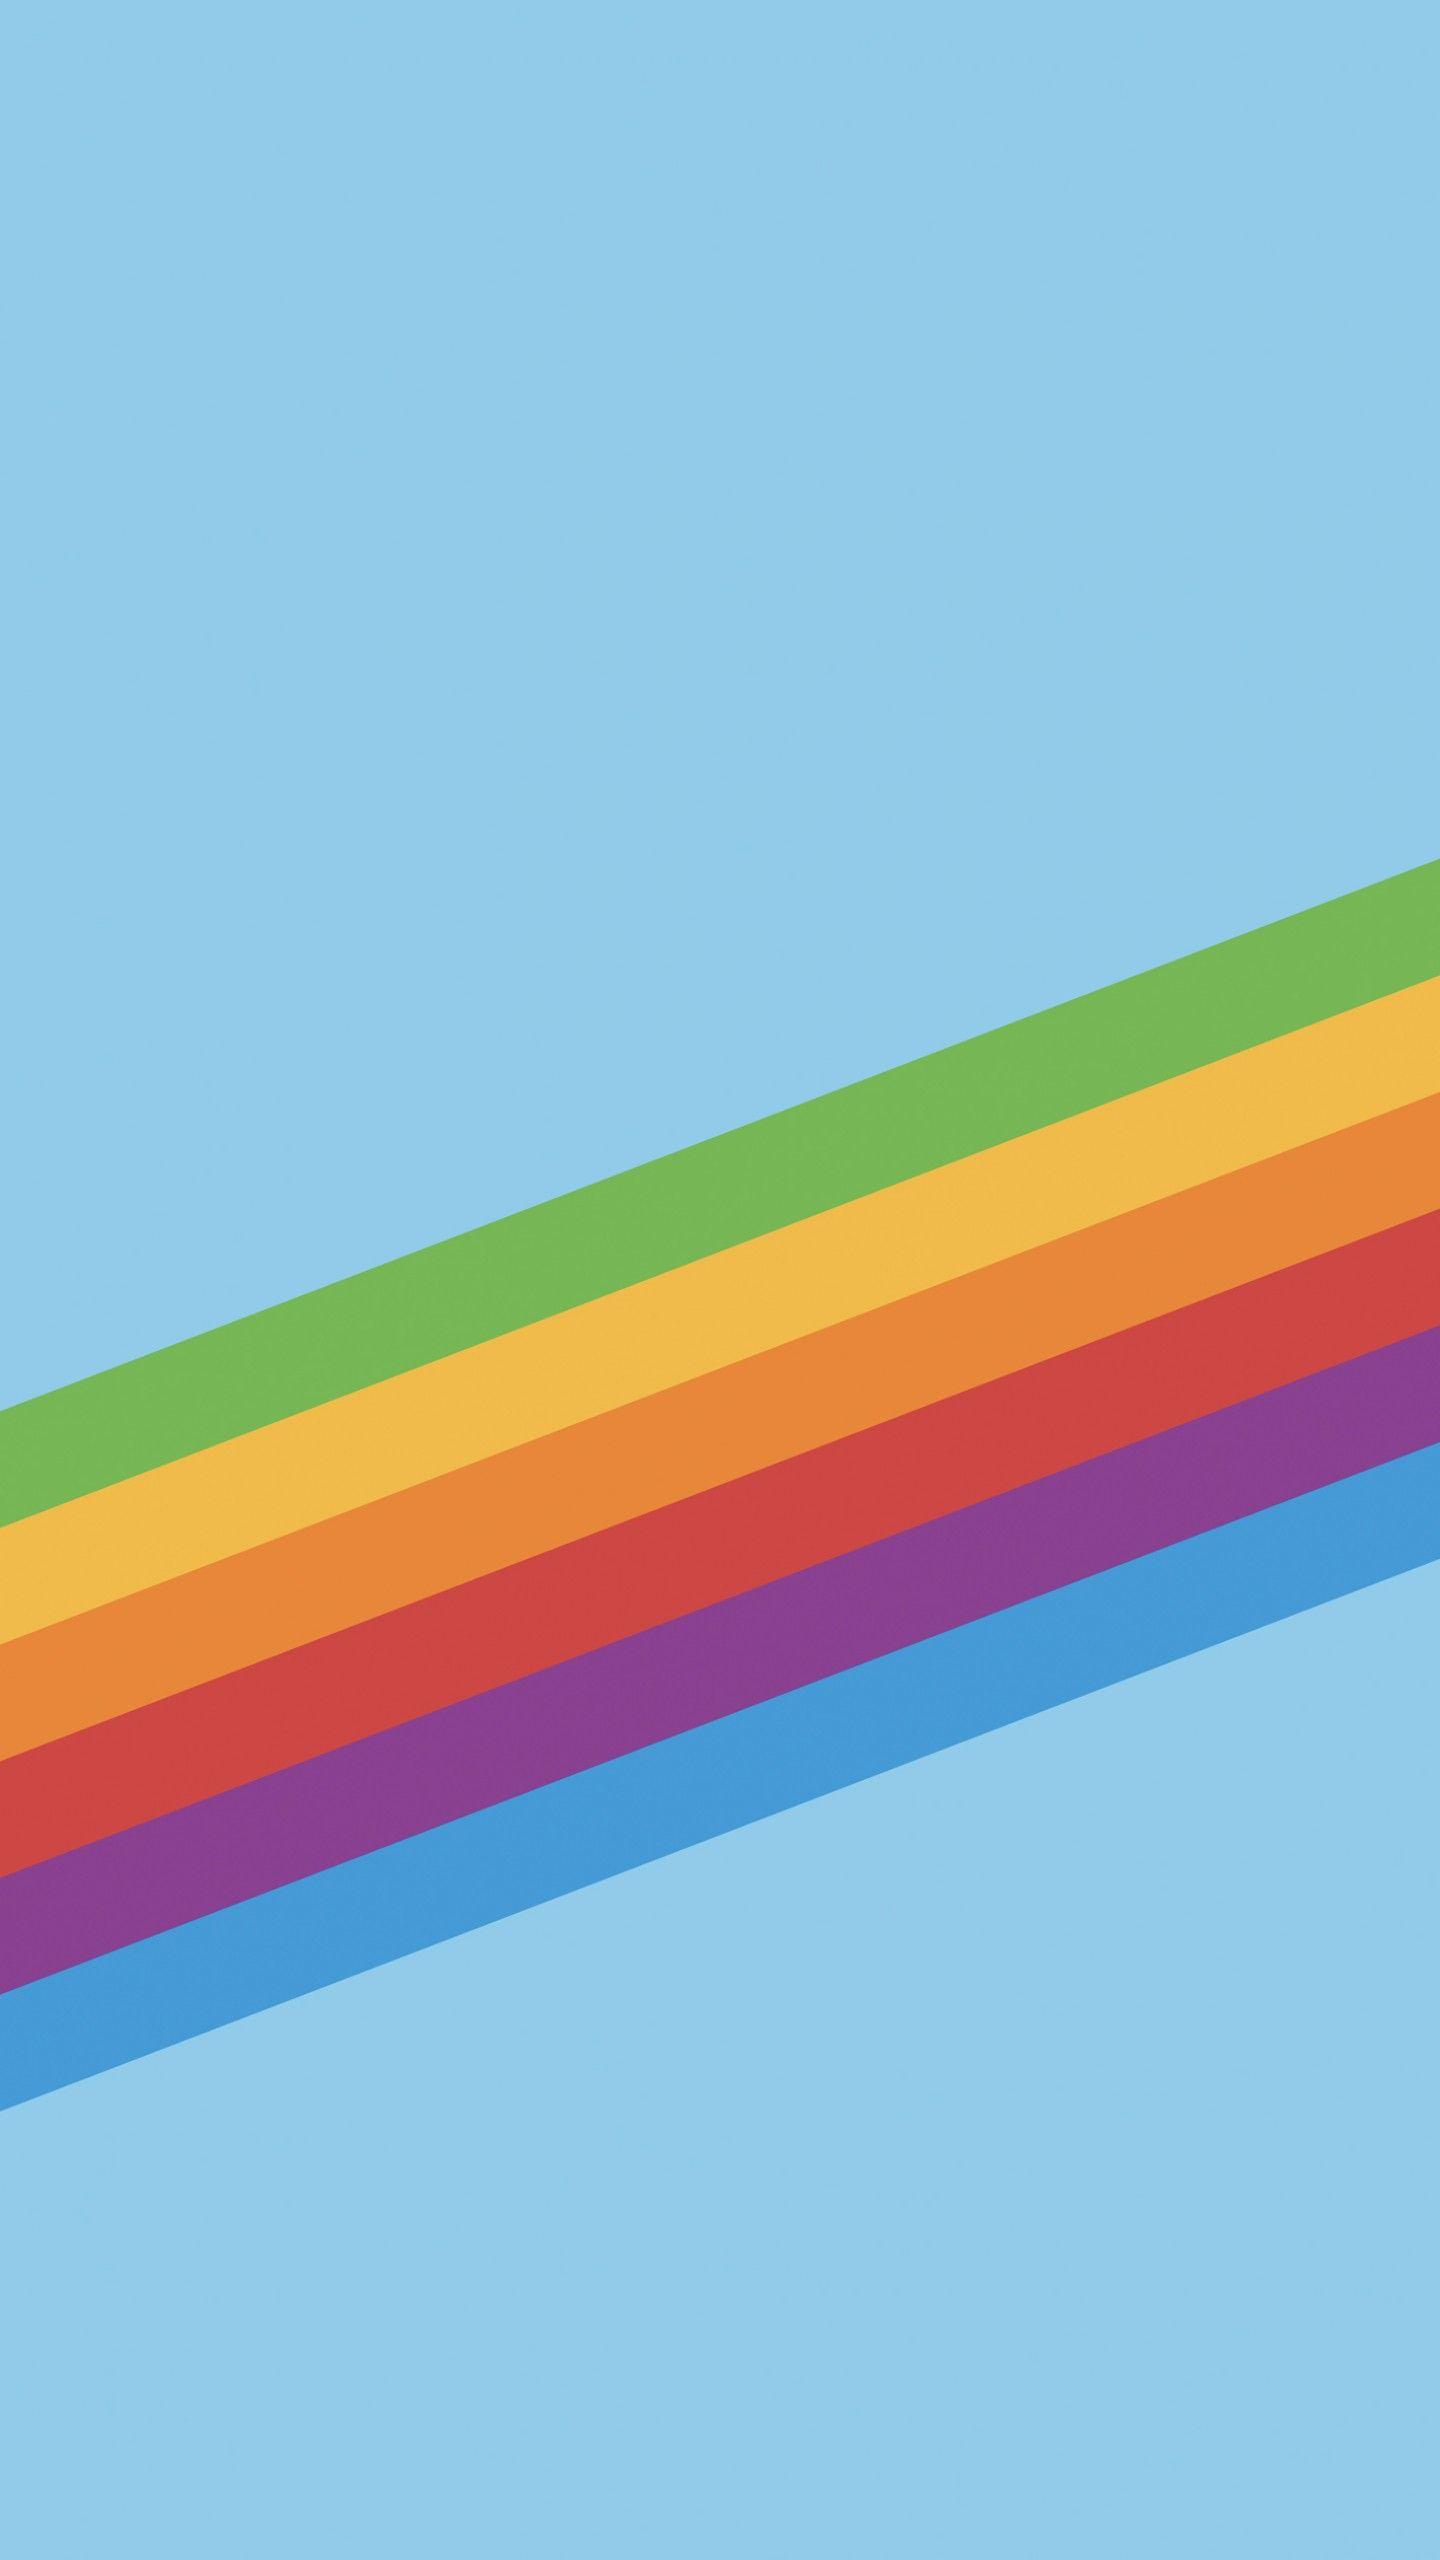 Retro Rainbow Wallpapers - Top Free Retro Rainbow Backgrounds ...